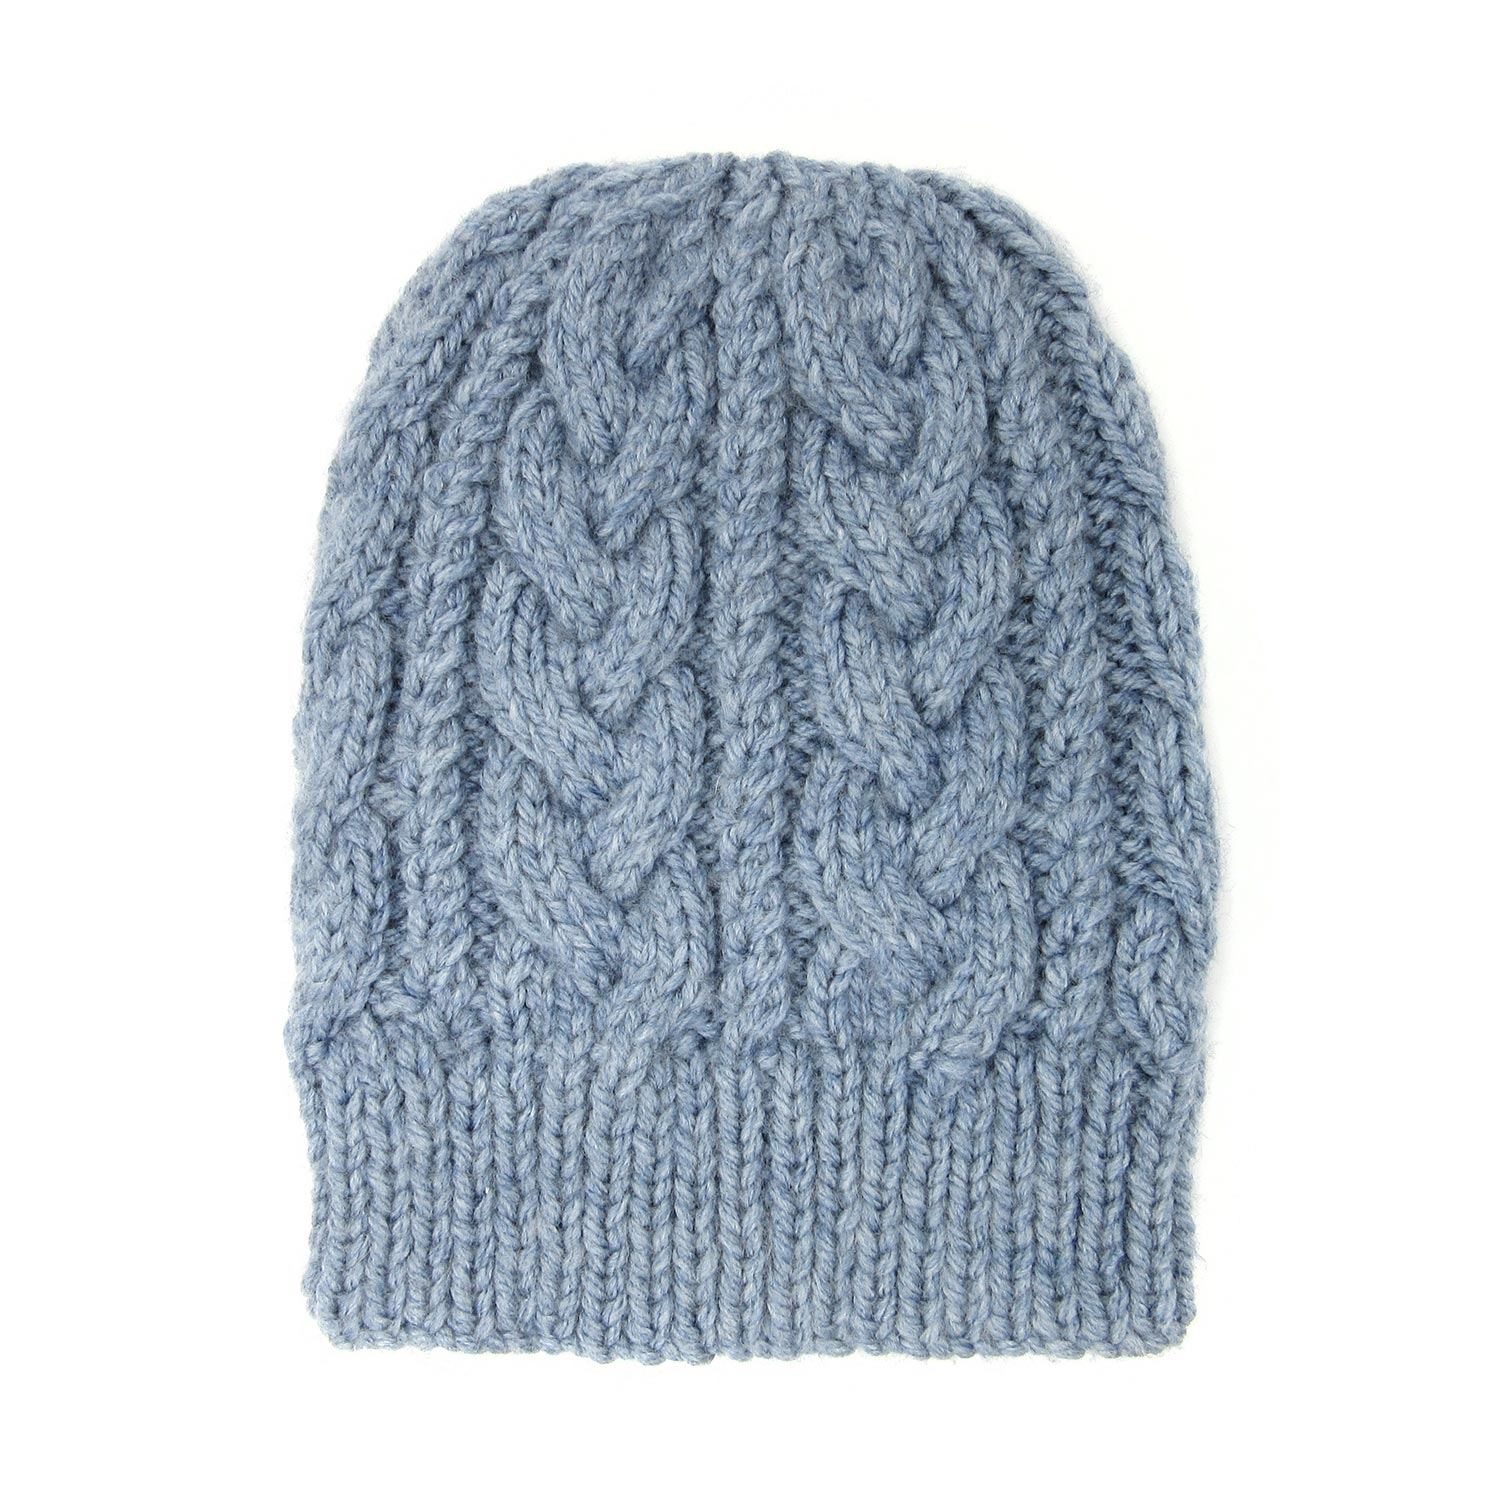 Simply Karoo Cable Knit Beanies Headwear Simply Karoo blue 